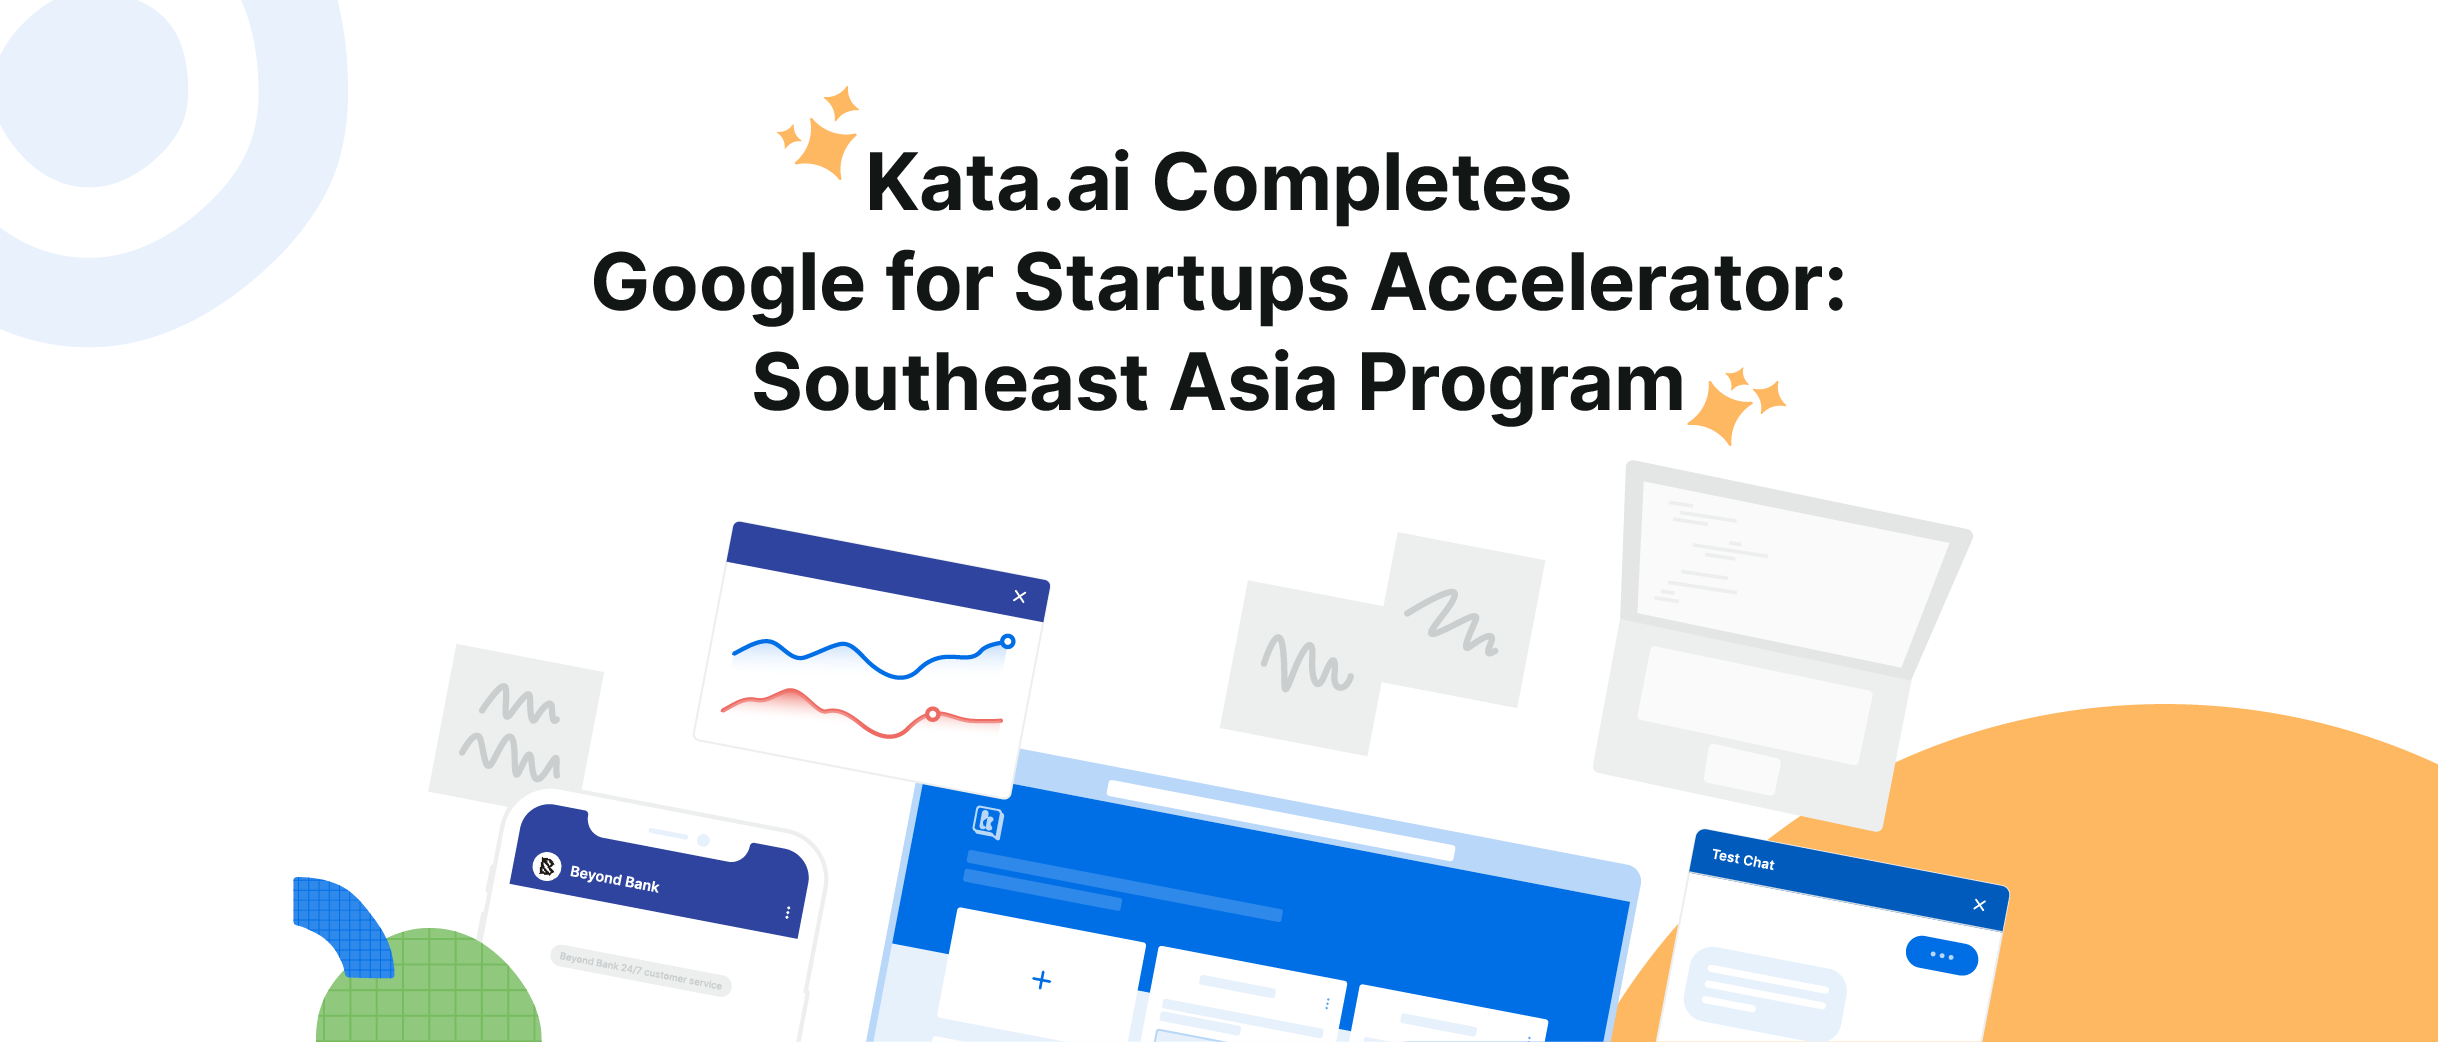 Kata.ai Completes Google for Startups Accelerator